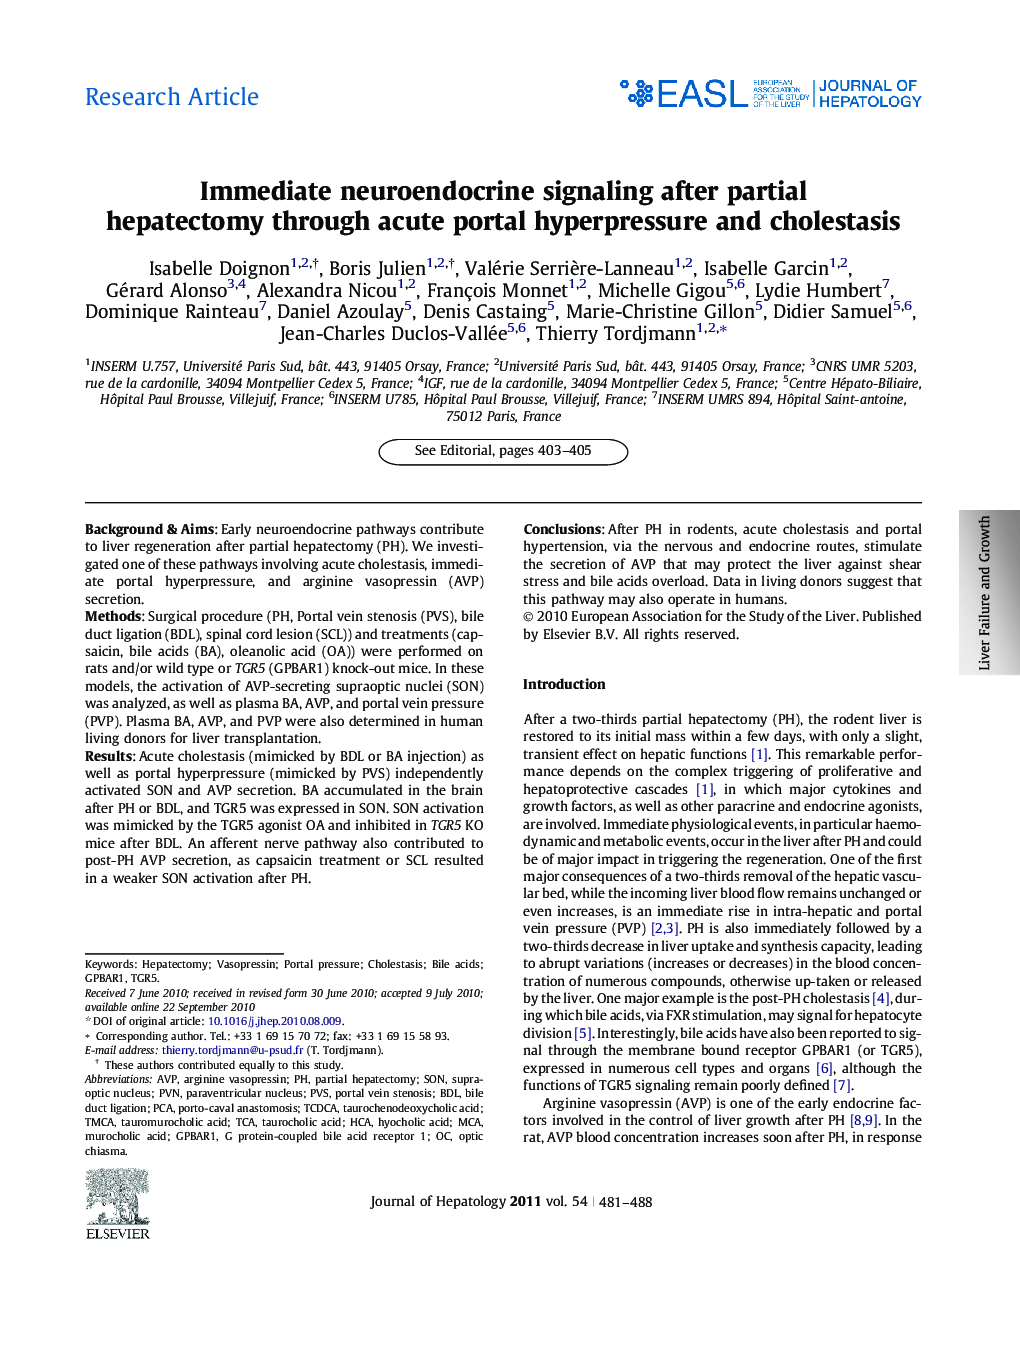 Research ArticleImmediate neuroendocrine signaling after partial hepatectomy through acute portal hyperpressure and cholestasis